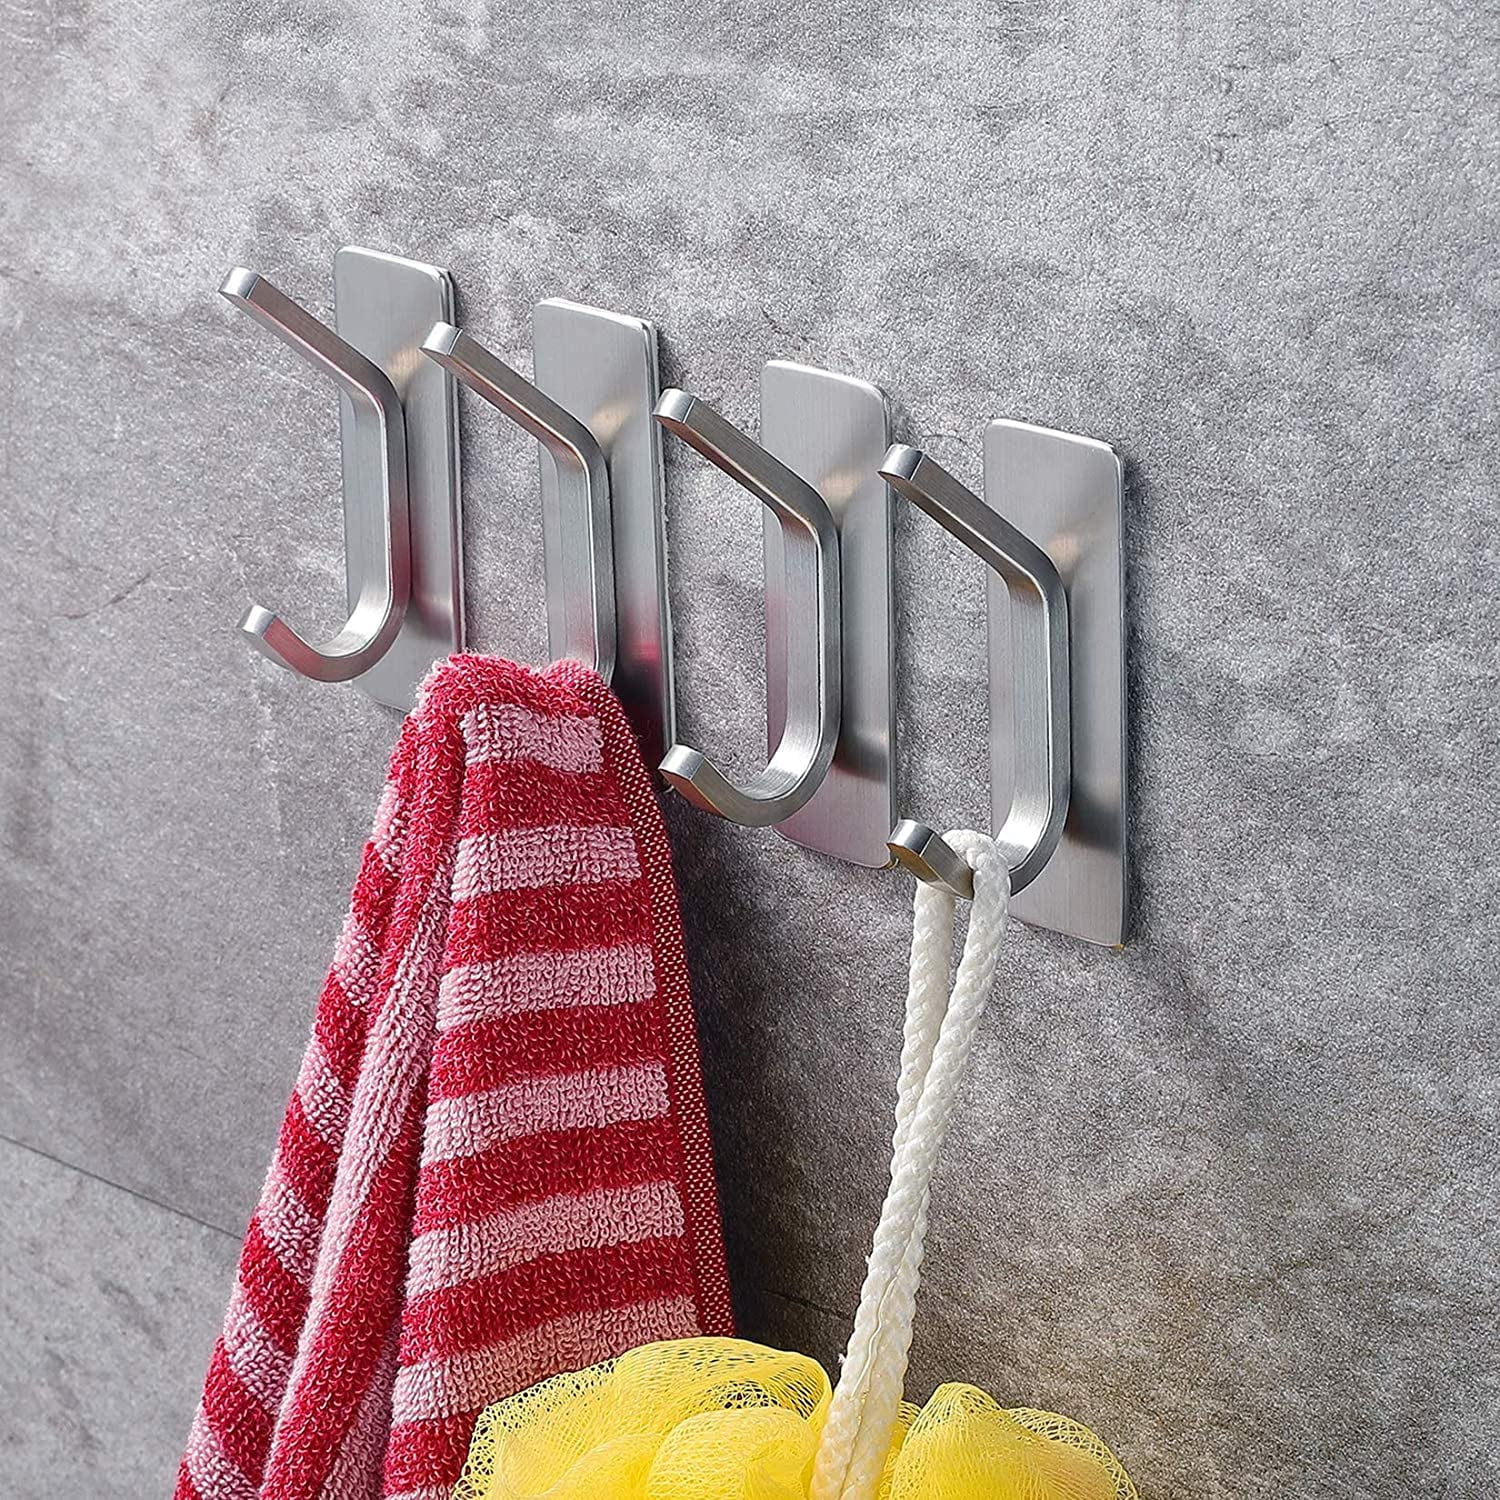 YOMYM Adhesive Hooks Bathroom Towel Shower Hooks Anti-Skid Heavy Duty Wall  Hooks Hanger Stick On Hooks for Hanging Towels, Robes, Coats, Keys,  Calendars-Bathroom Home Kitchen-4 Packs price in UAE,  UAE